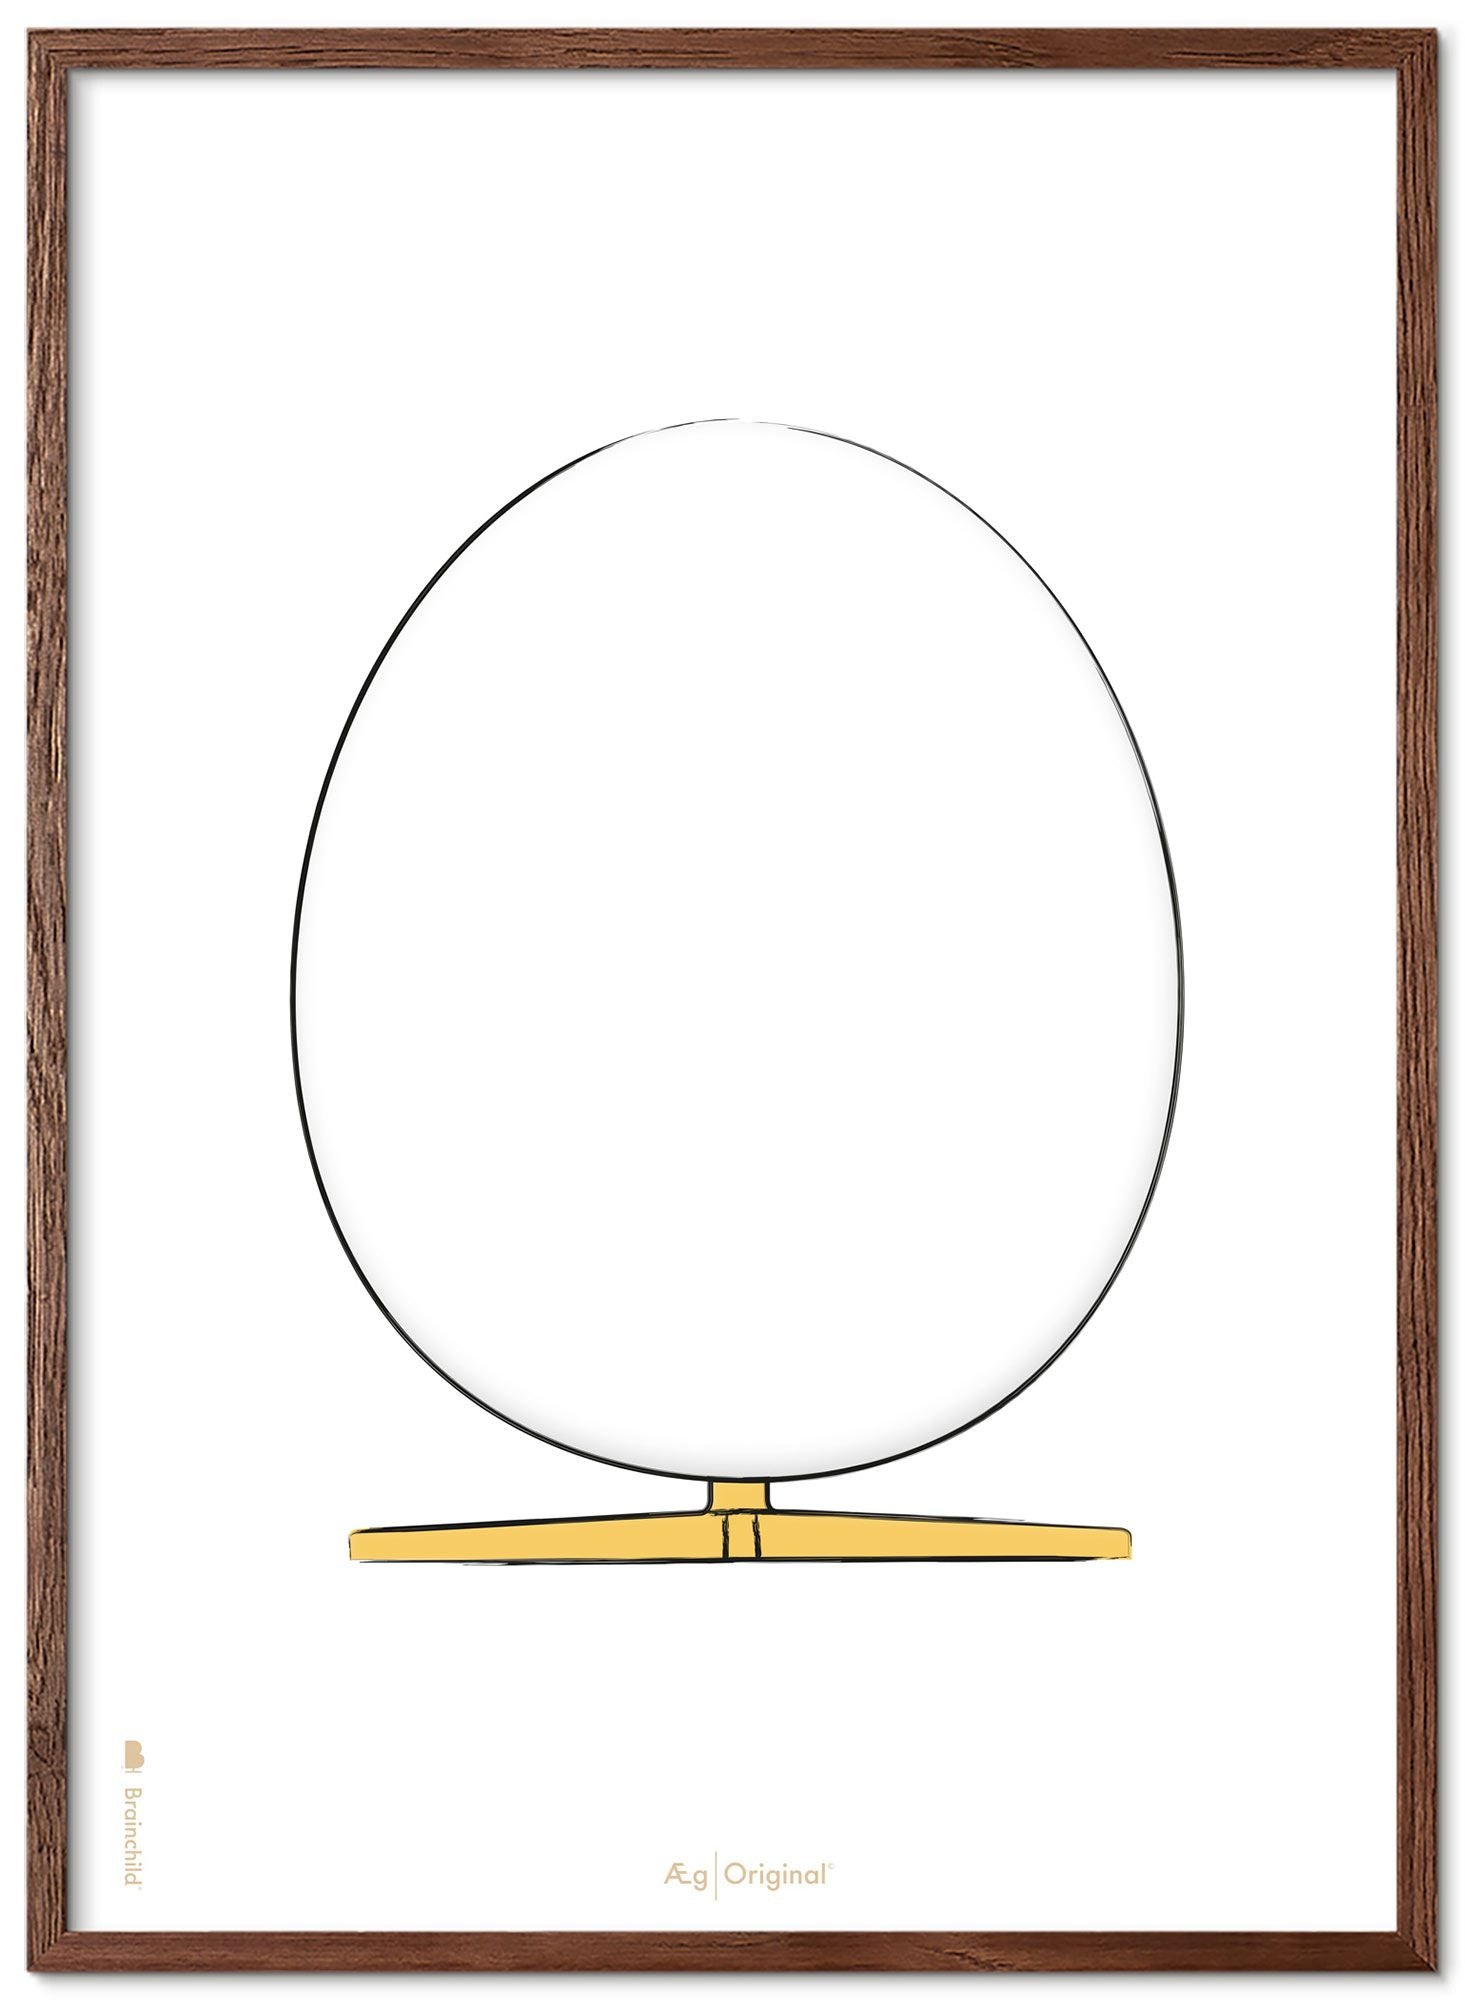 Brainchild The Egg Design Sketch Poster Frame Made Of Dark Wood 30x40 Cm, White Background